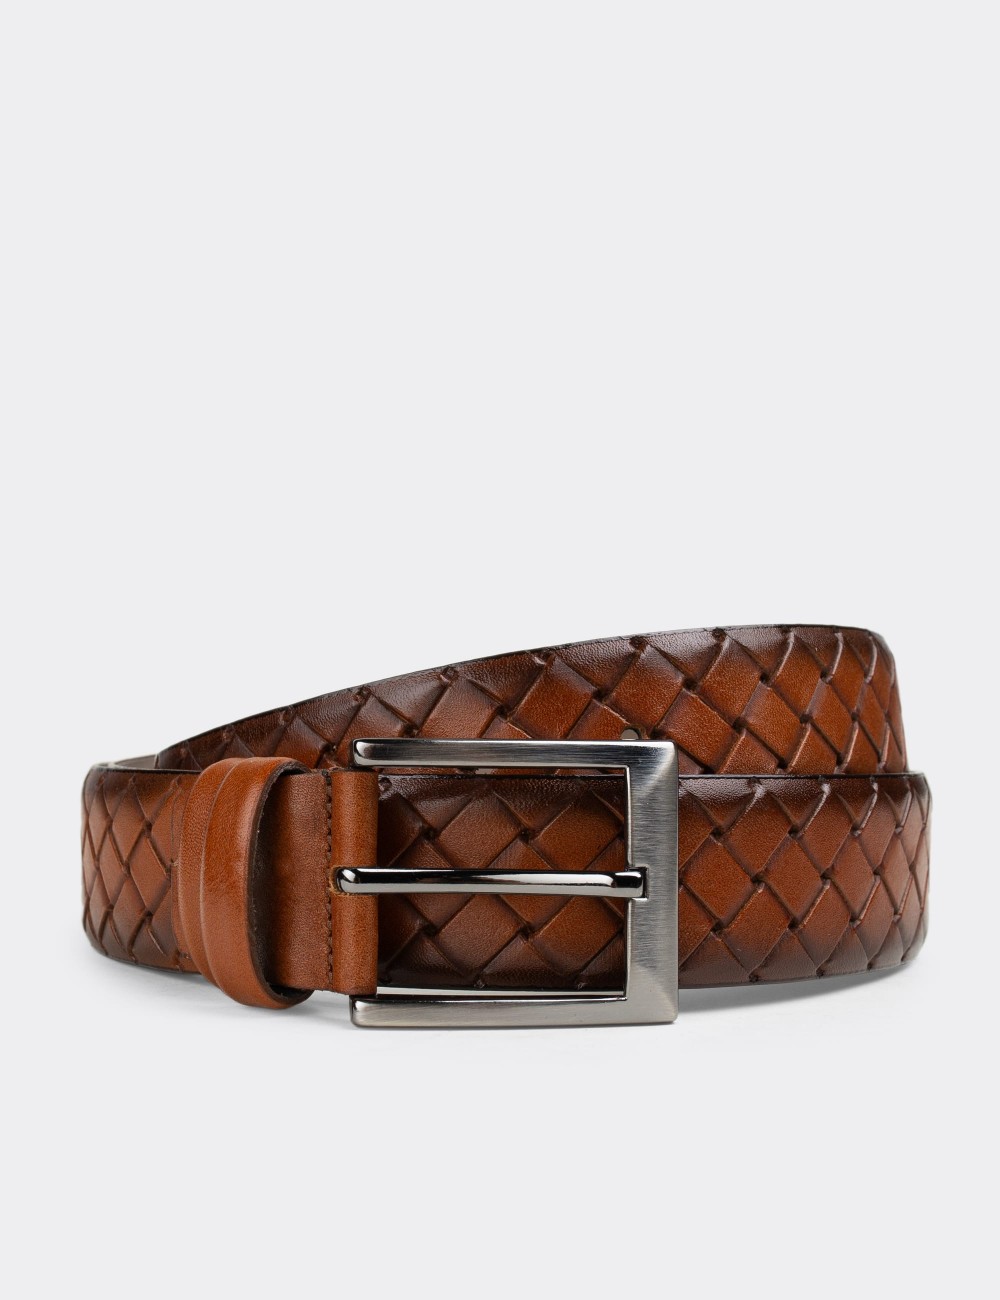  Leather Tan Men's Belt - K0400MTBAW01